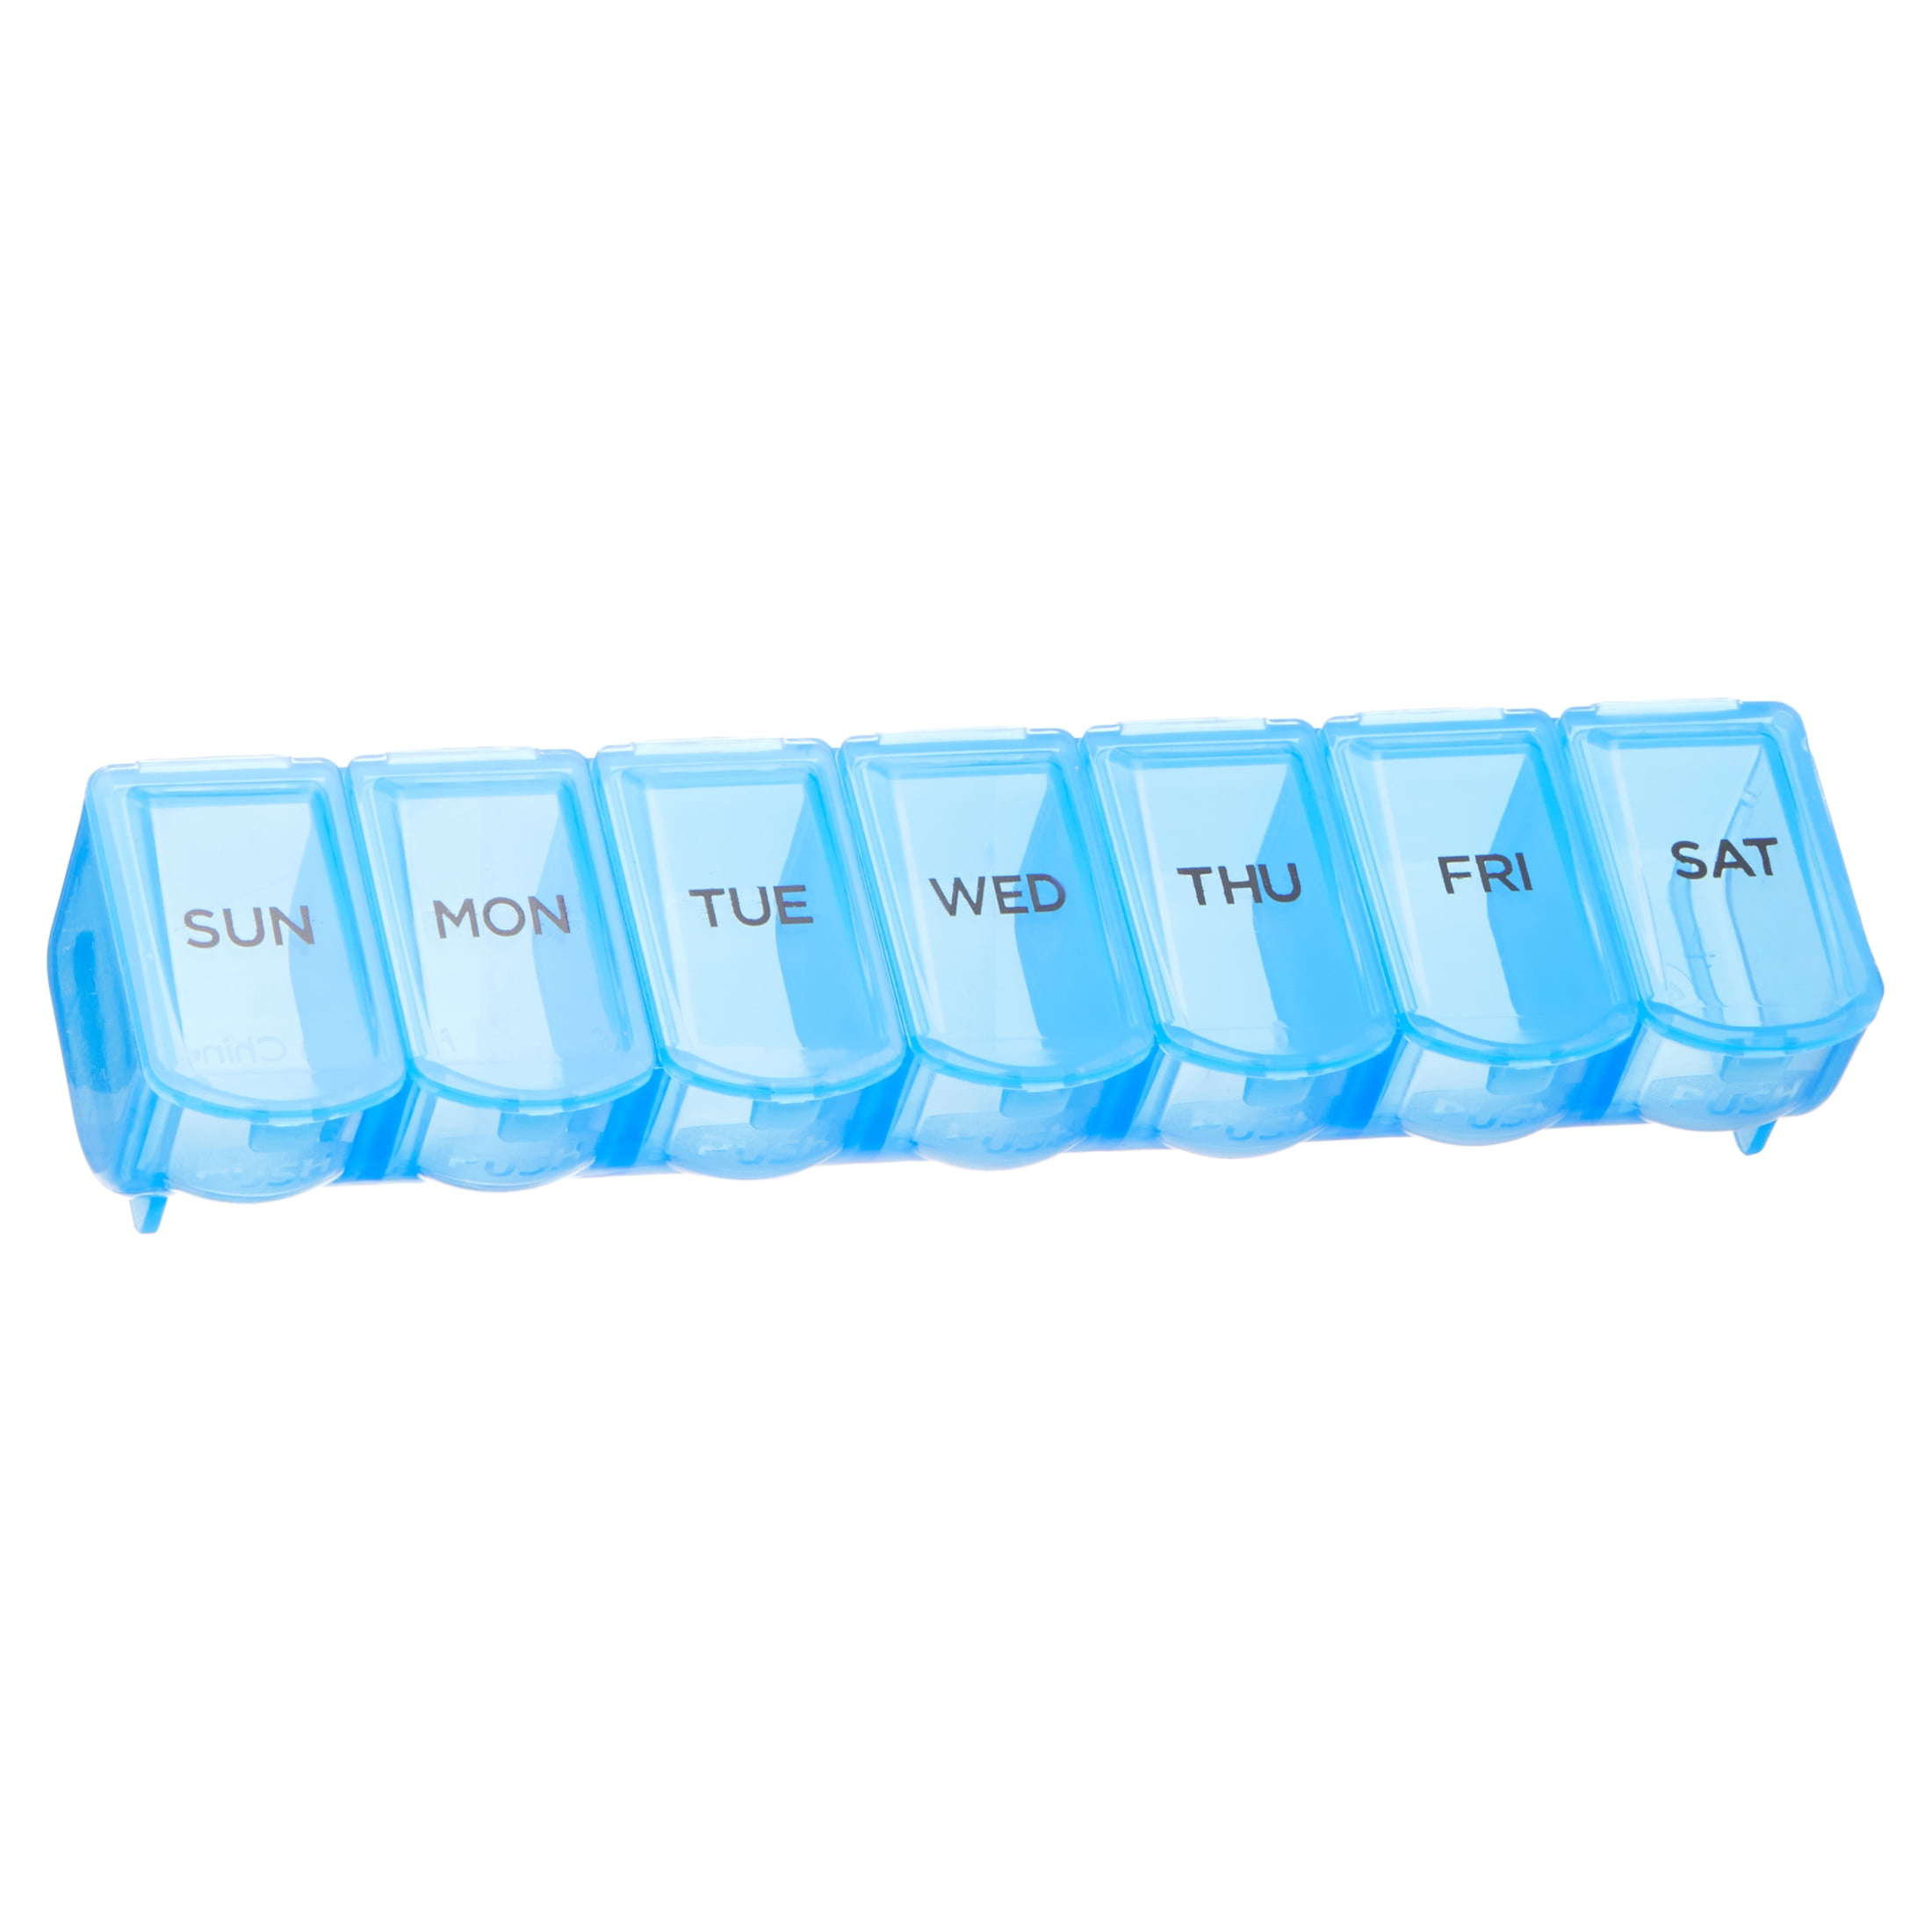 Mumi 11-Piece Reusable Labeled Zip Pill Pouch & Organizer Bag Set 